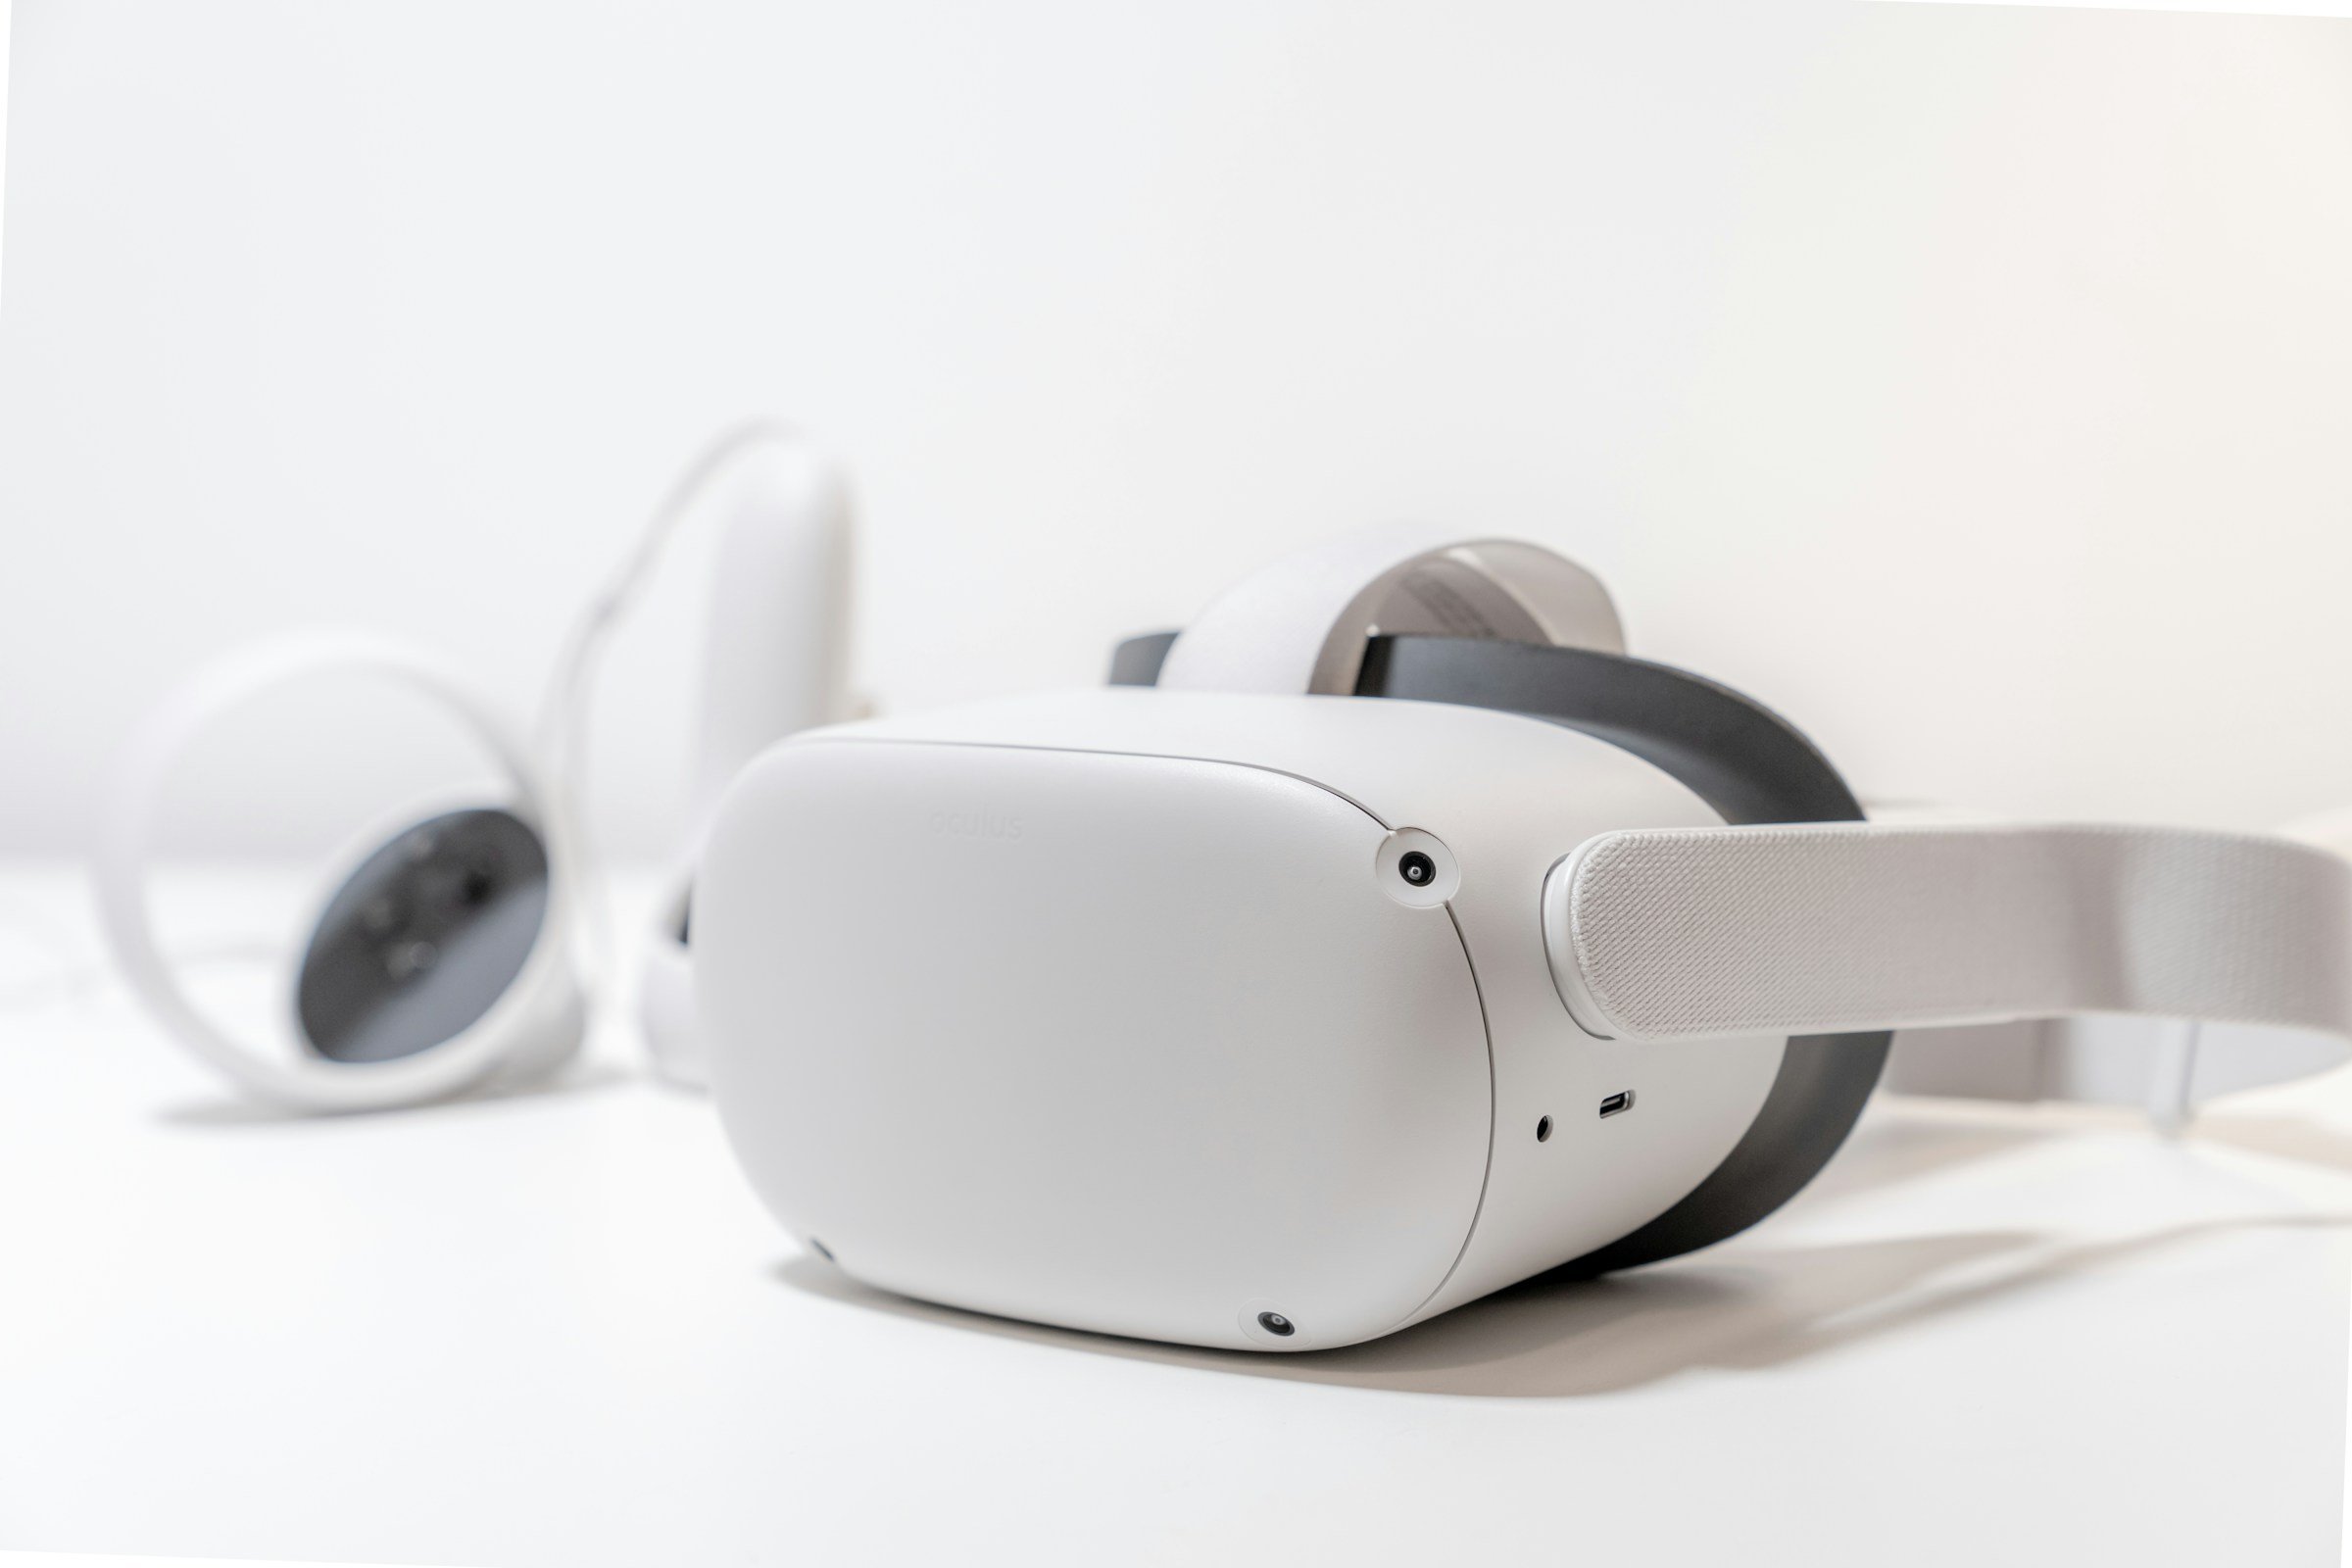 A white Oculus Meta Quest Virtual Reality headset